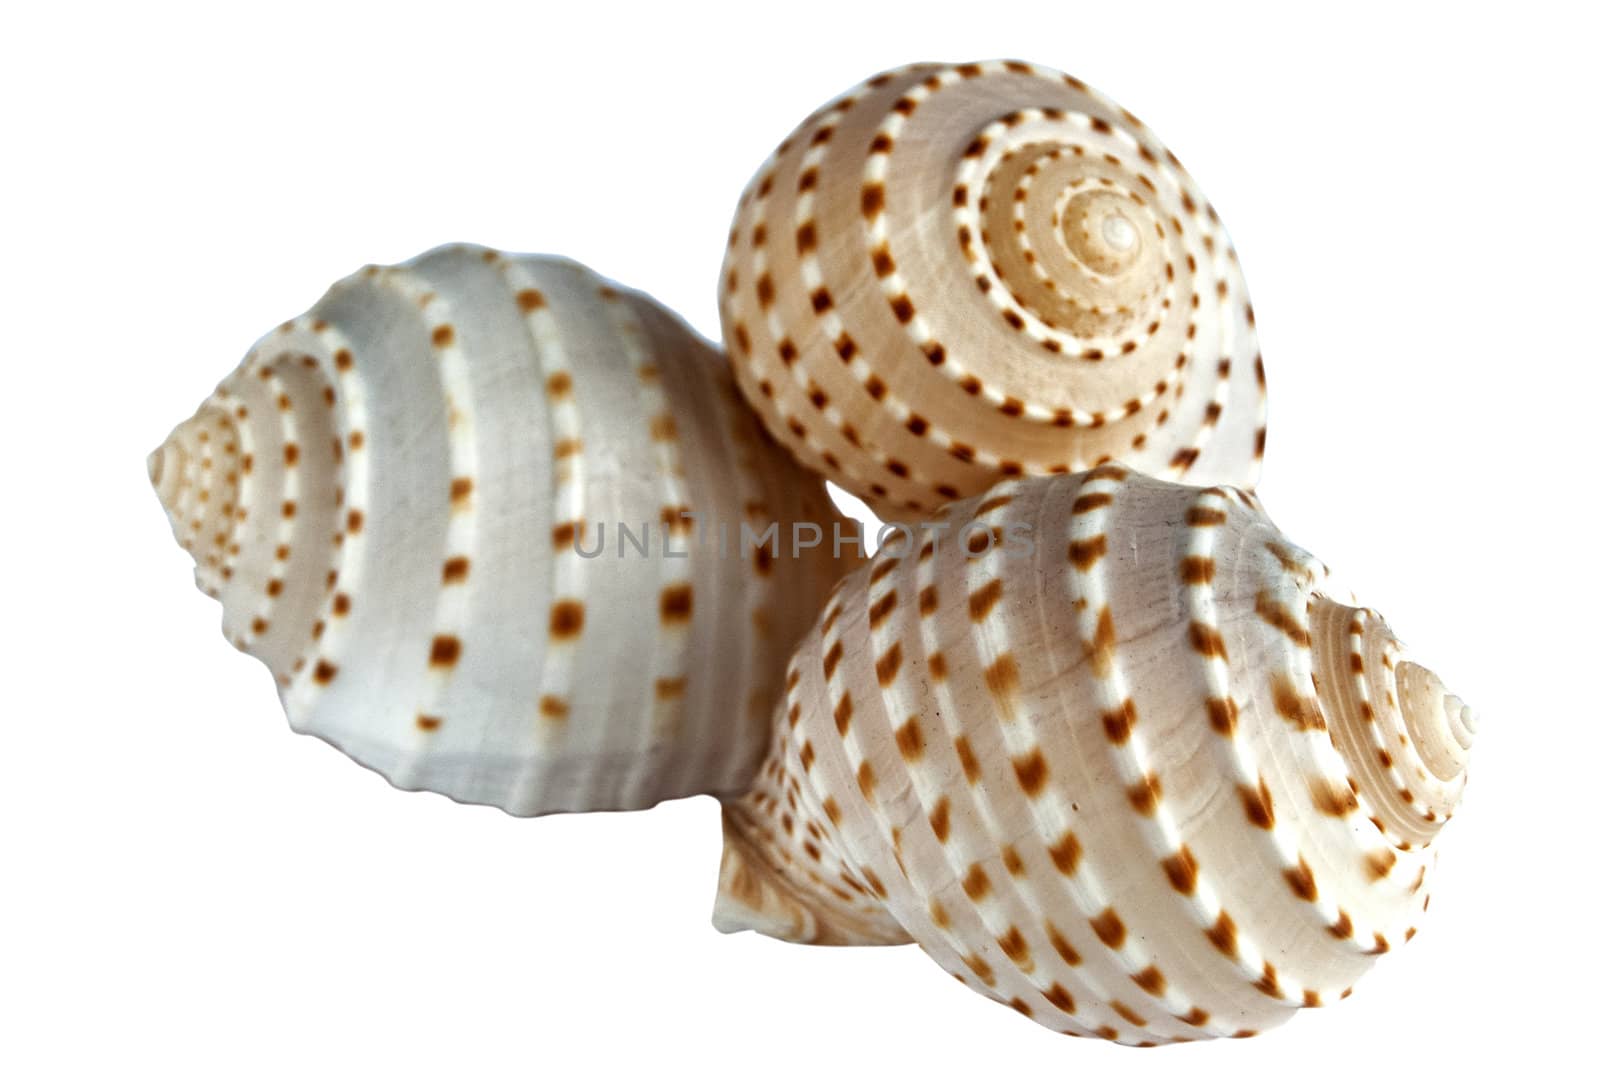 Three conch shells by varbenov